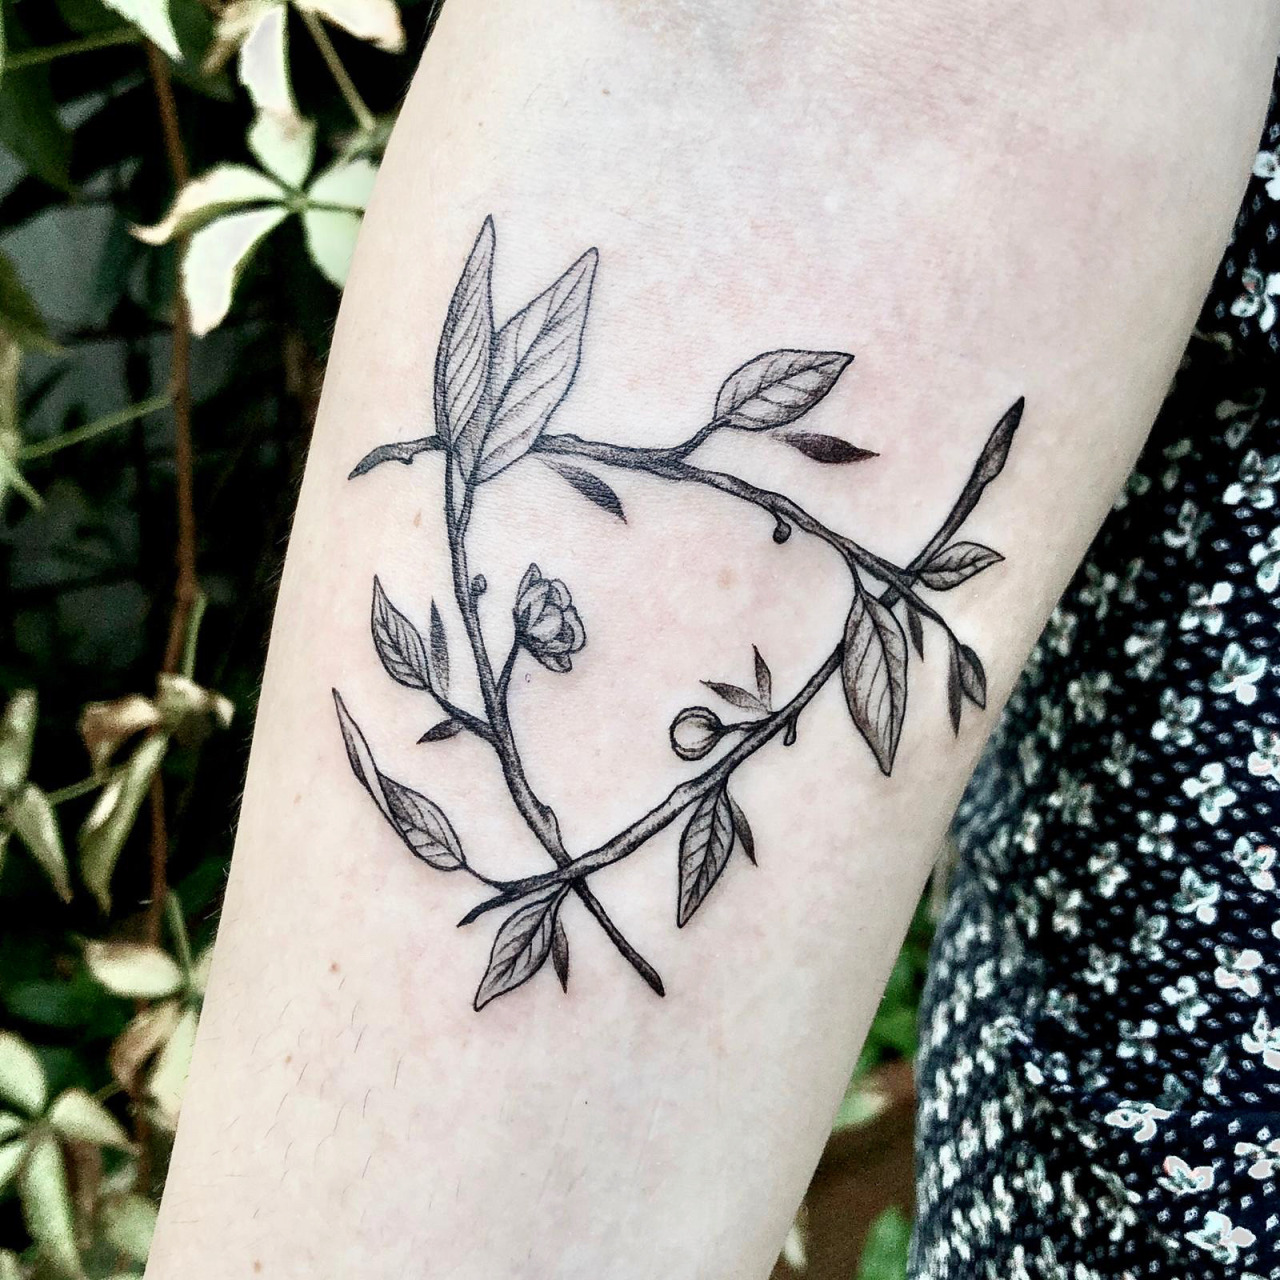 Tattoo uploaded by Lazlo DaSilva • Nº295 Family Tree #tattoo #tatuaje #tree  #treetattoo #family #legacy #blackwork #blacktattoo #roots #branches  #bylazlodasilva • Tattoodo